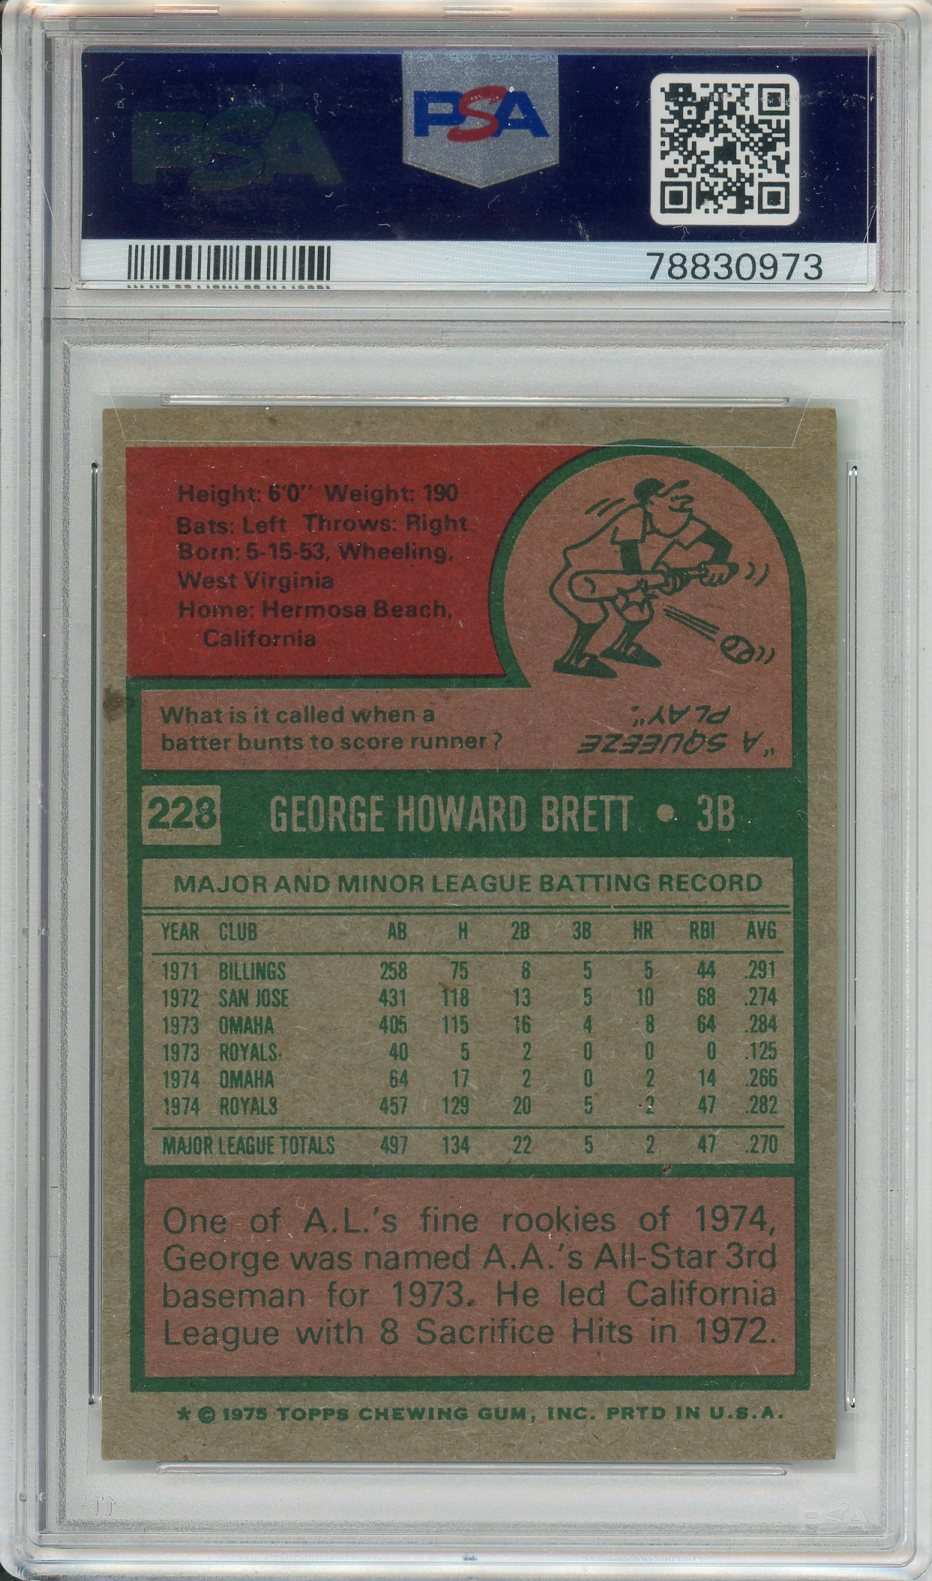 1975 Topps George Brett #228 Graded Rookie Card PSA 5